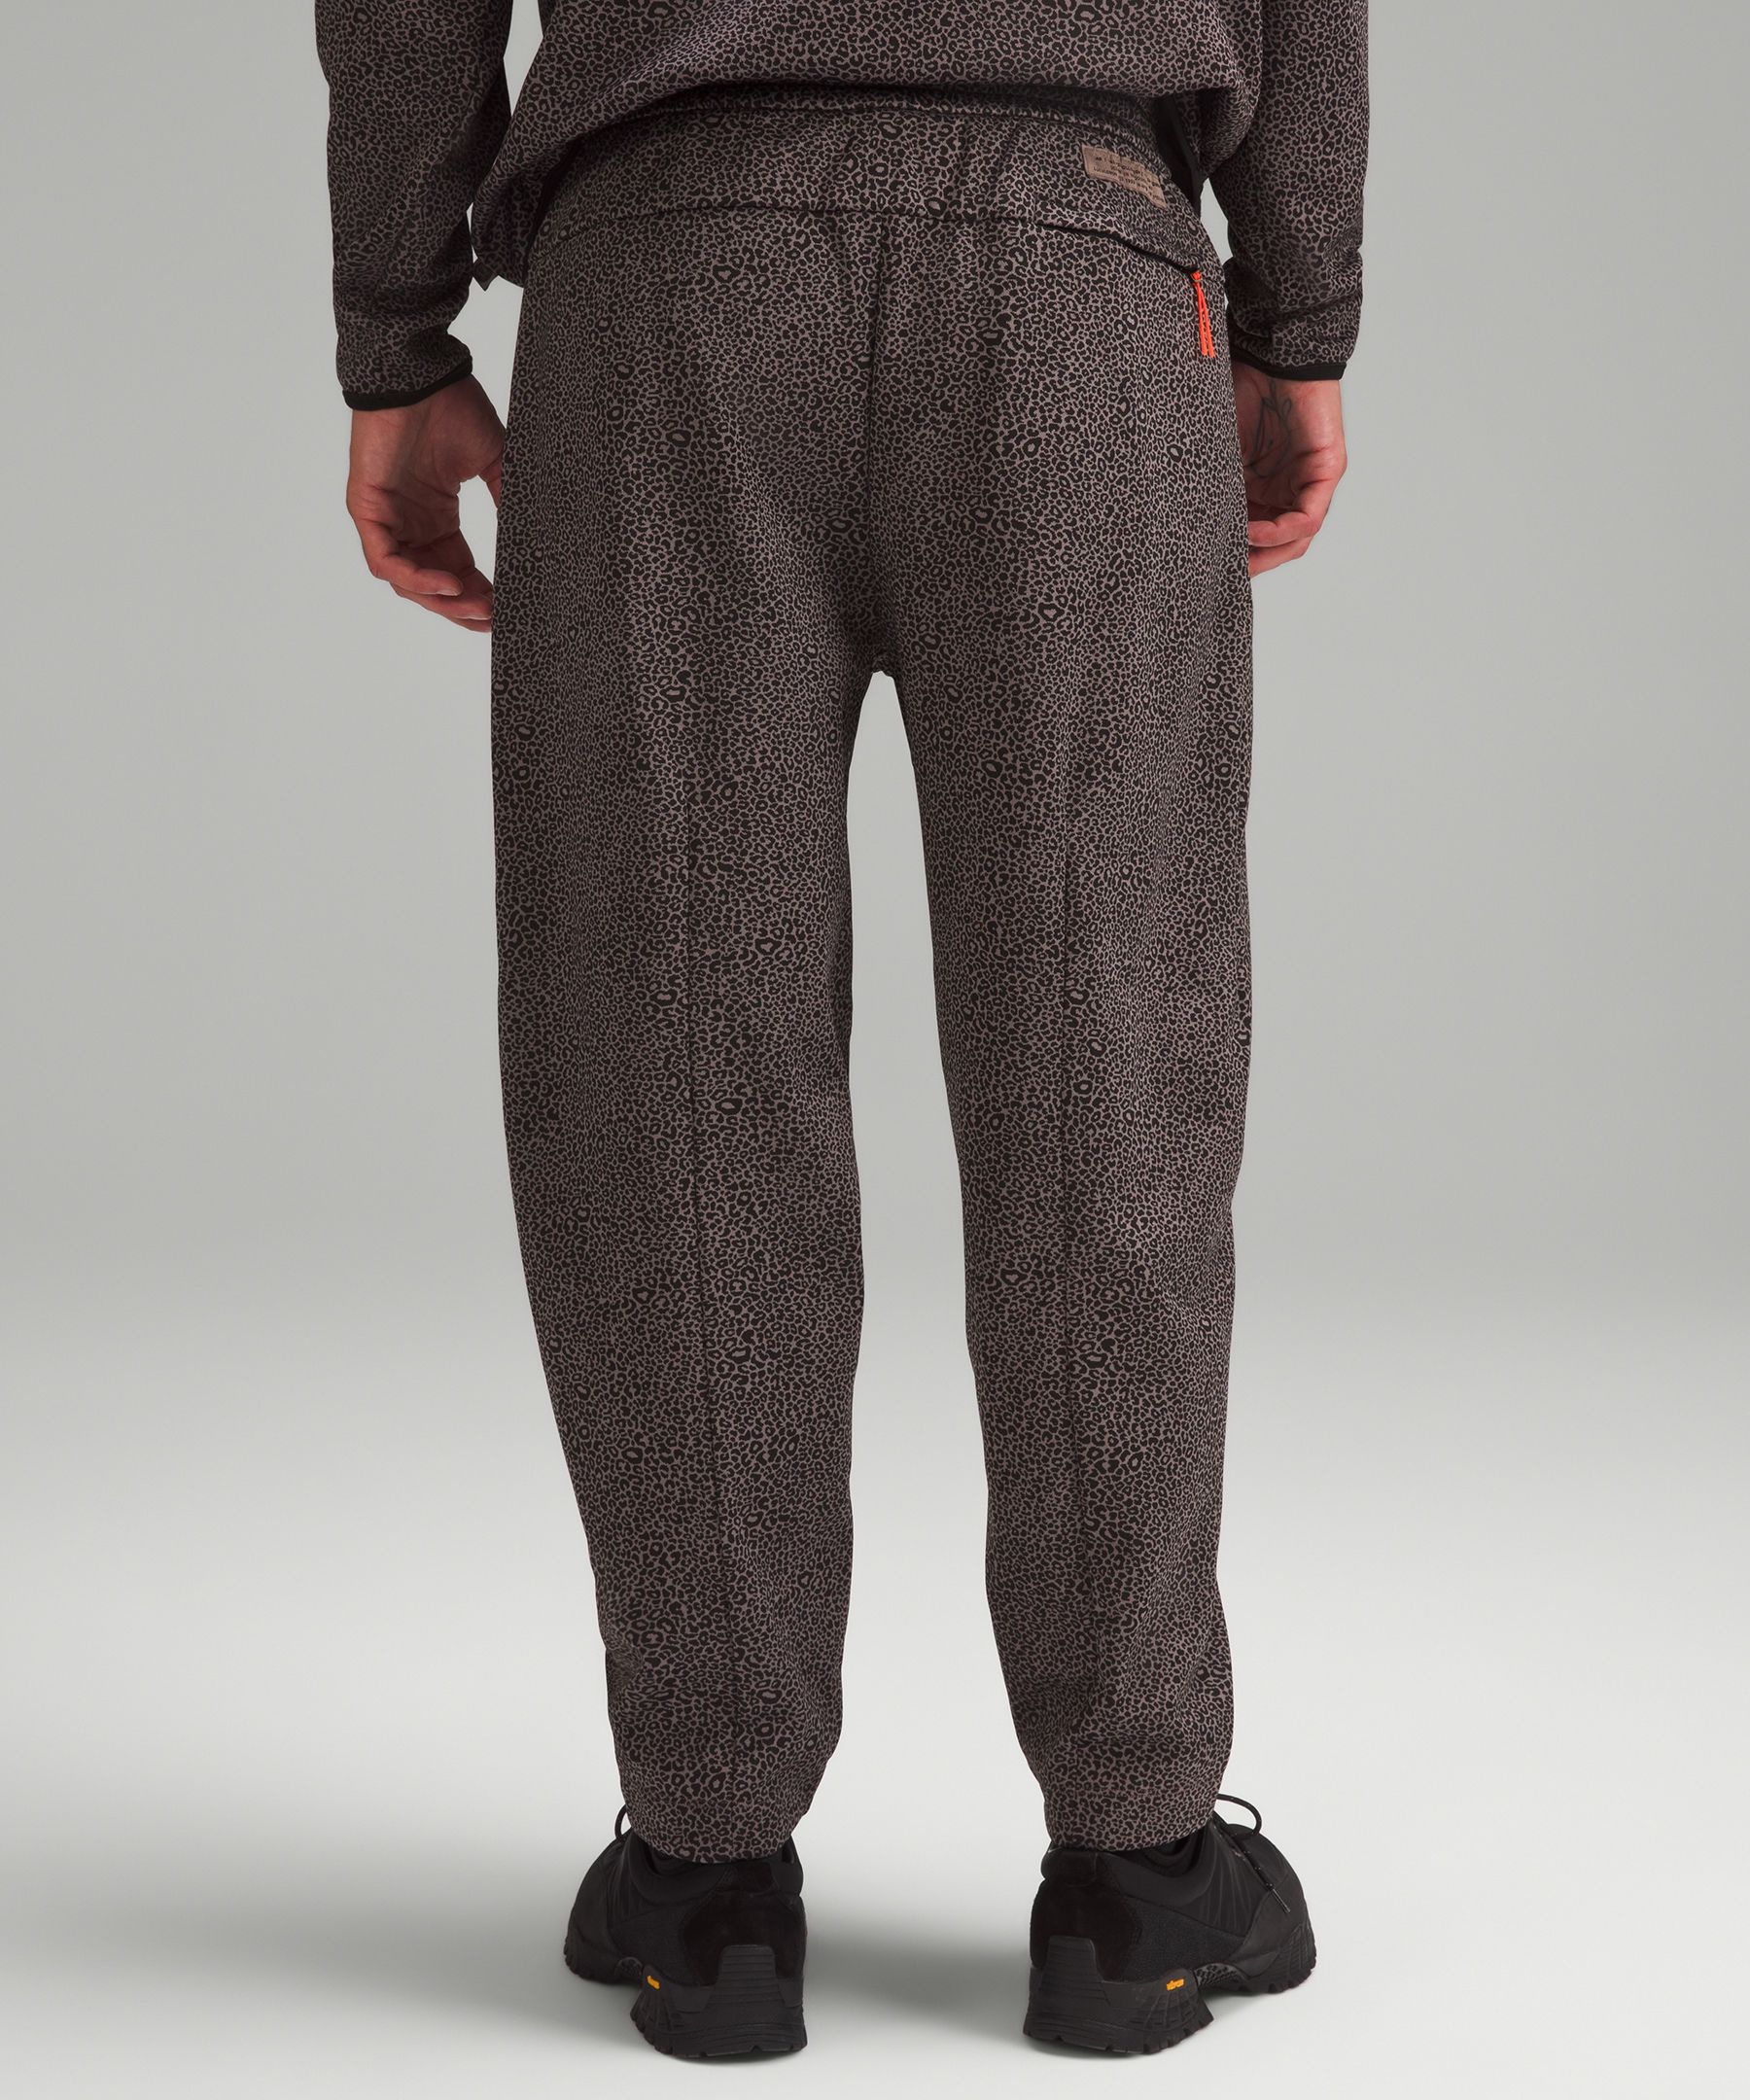 Grey Lab Women's Loungewear Knit Pants